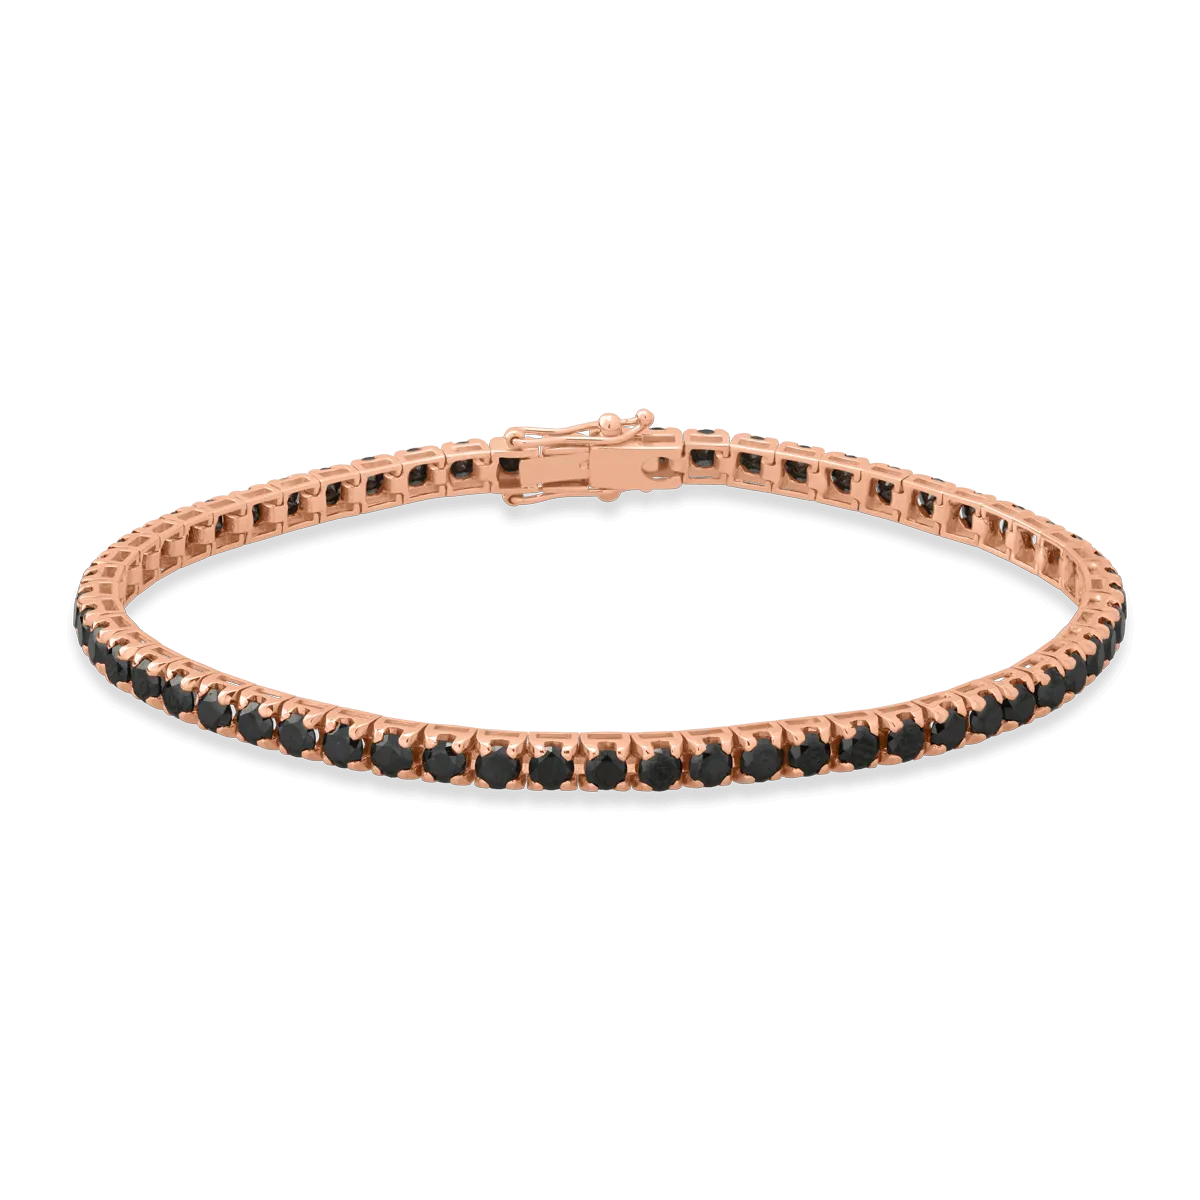 18K rose gold tennis bracelet with 8.45ct black diamonds